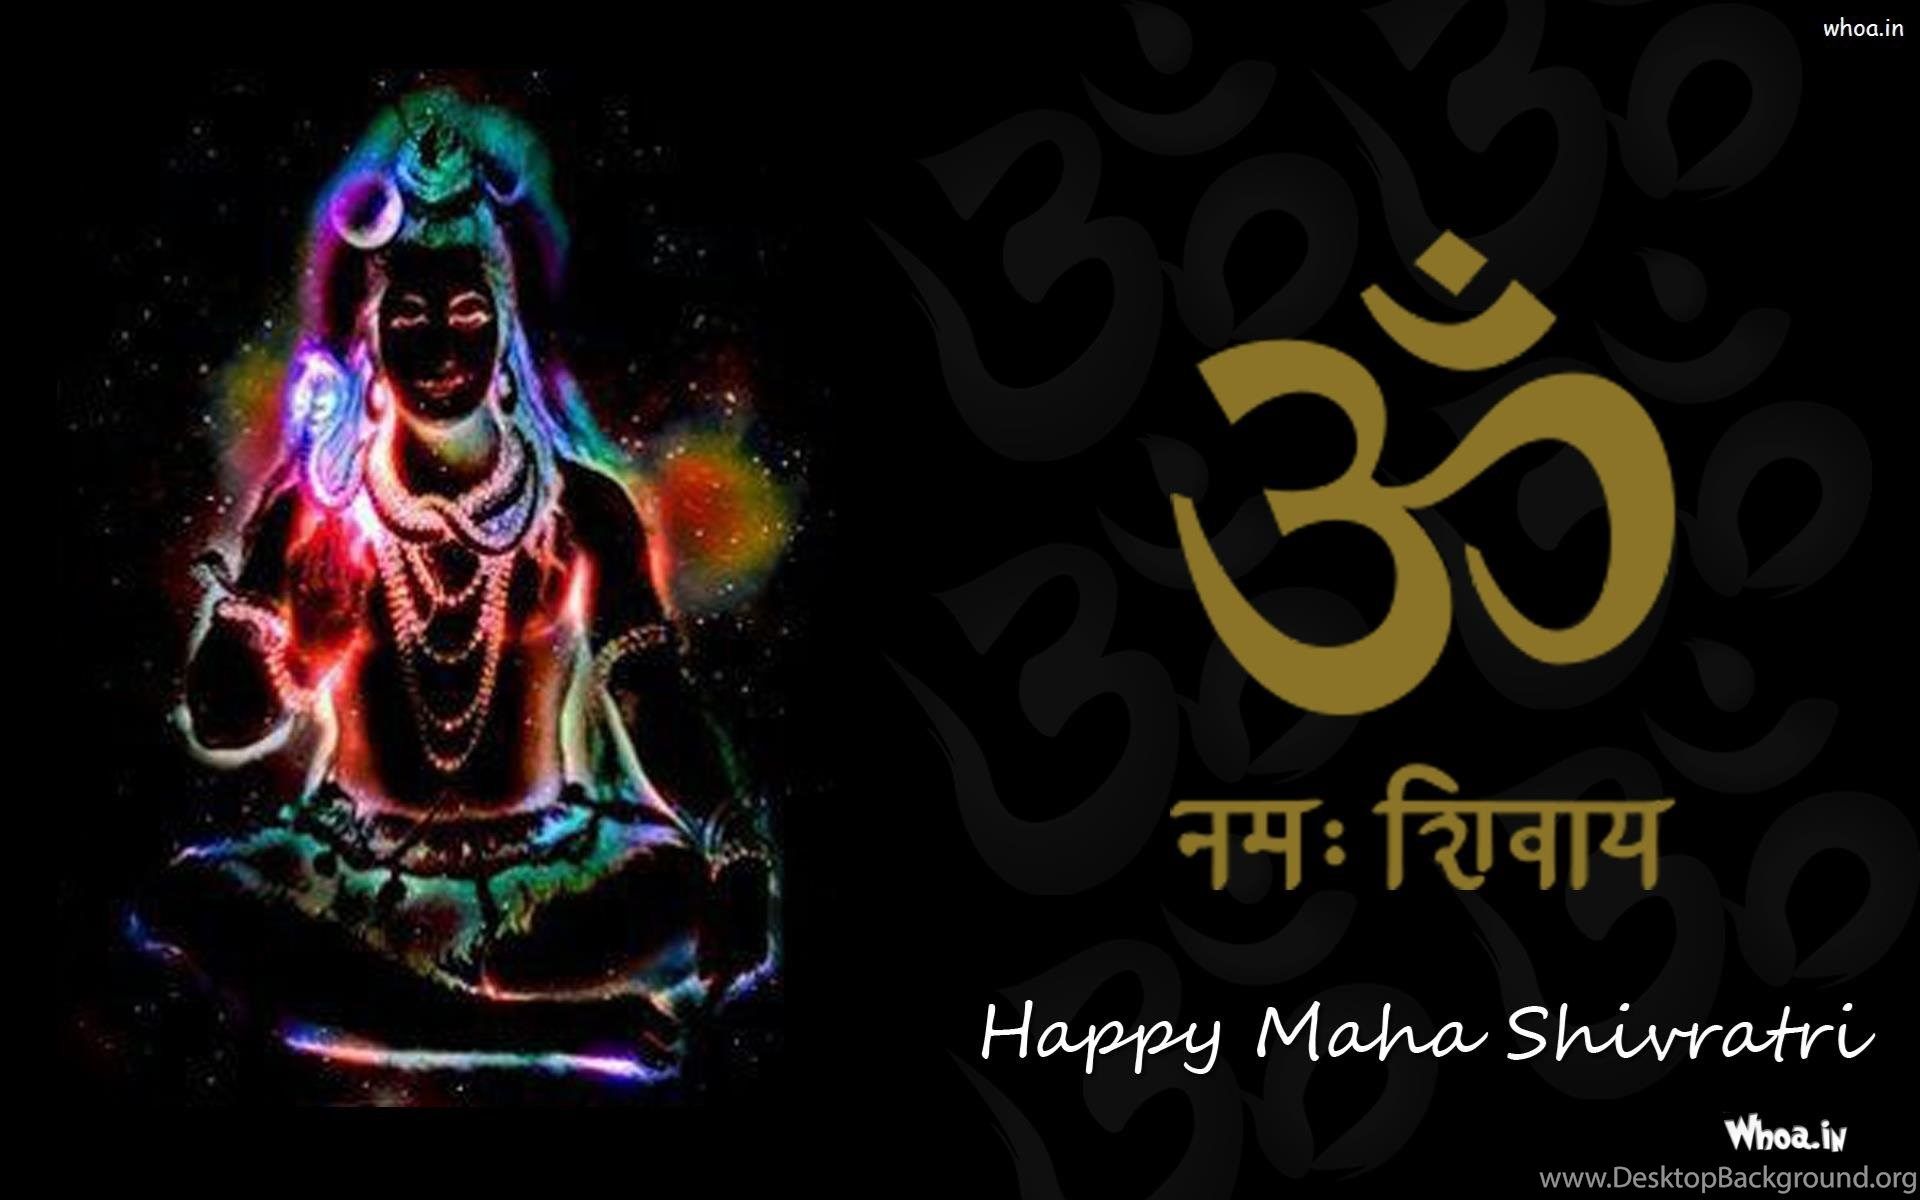 Om Namah Shivaya And Lord Shiva Wallpaper With Black Background Desktop Background